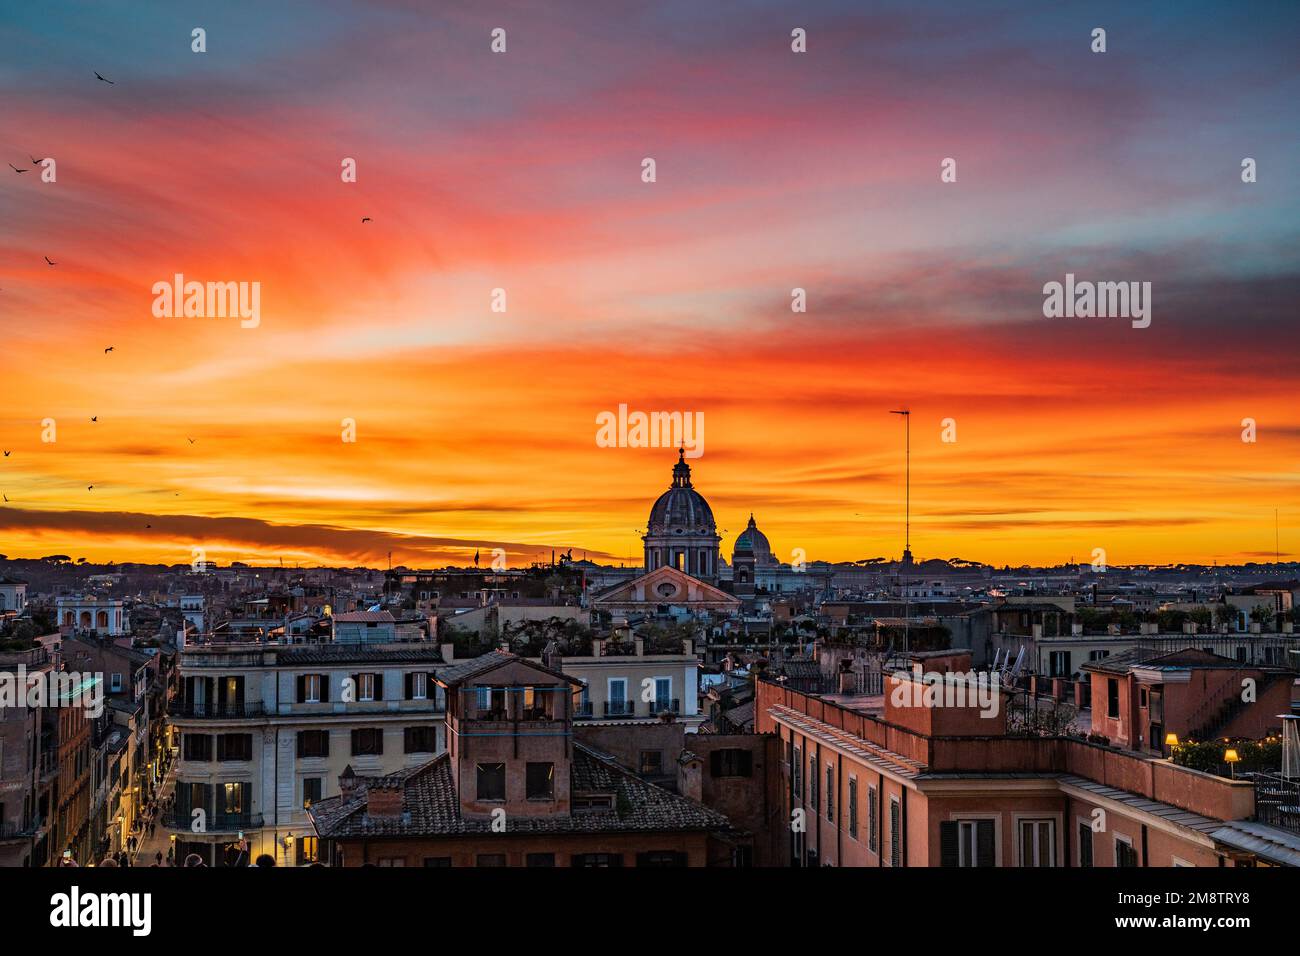 Roma, Hauptstadt Italiens. Wunderschöner Panoramablick über die Ewige Stadt mit ihren Kuppeln am Horizont. Stockfoto